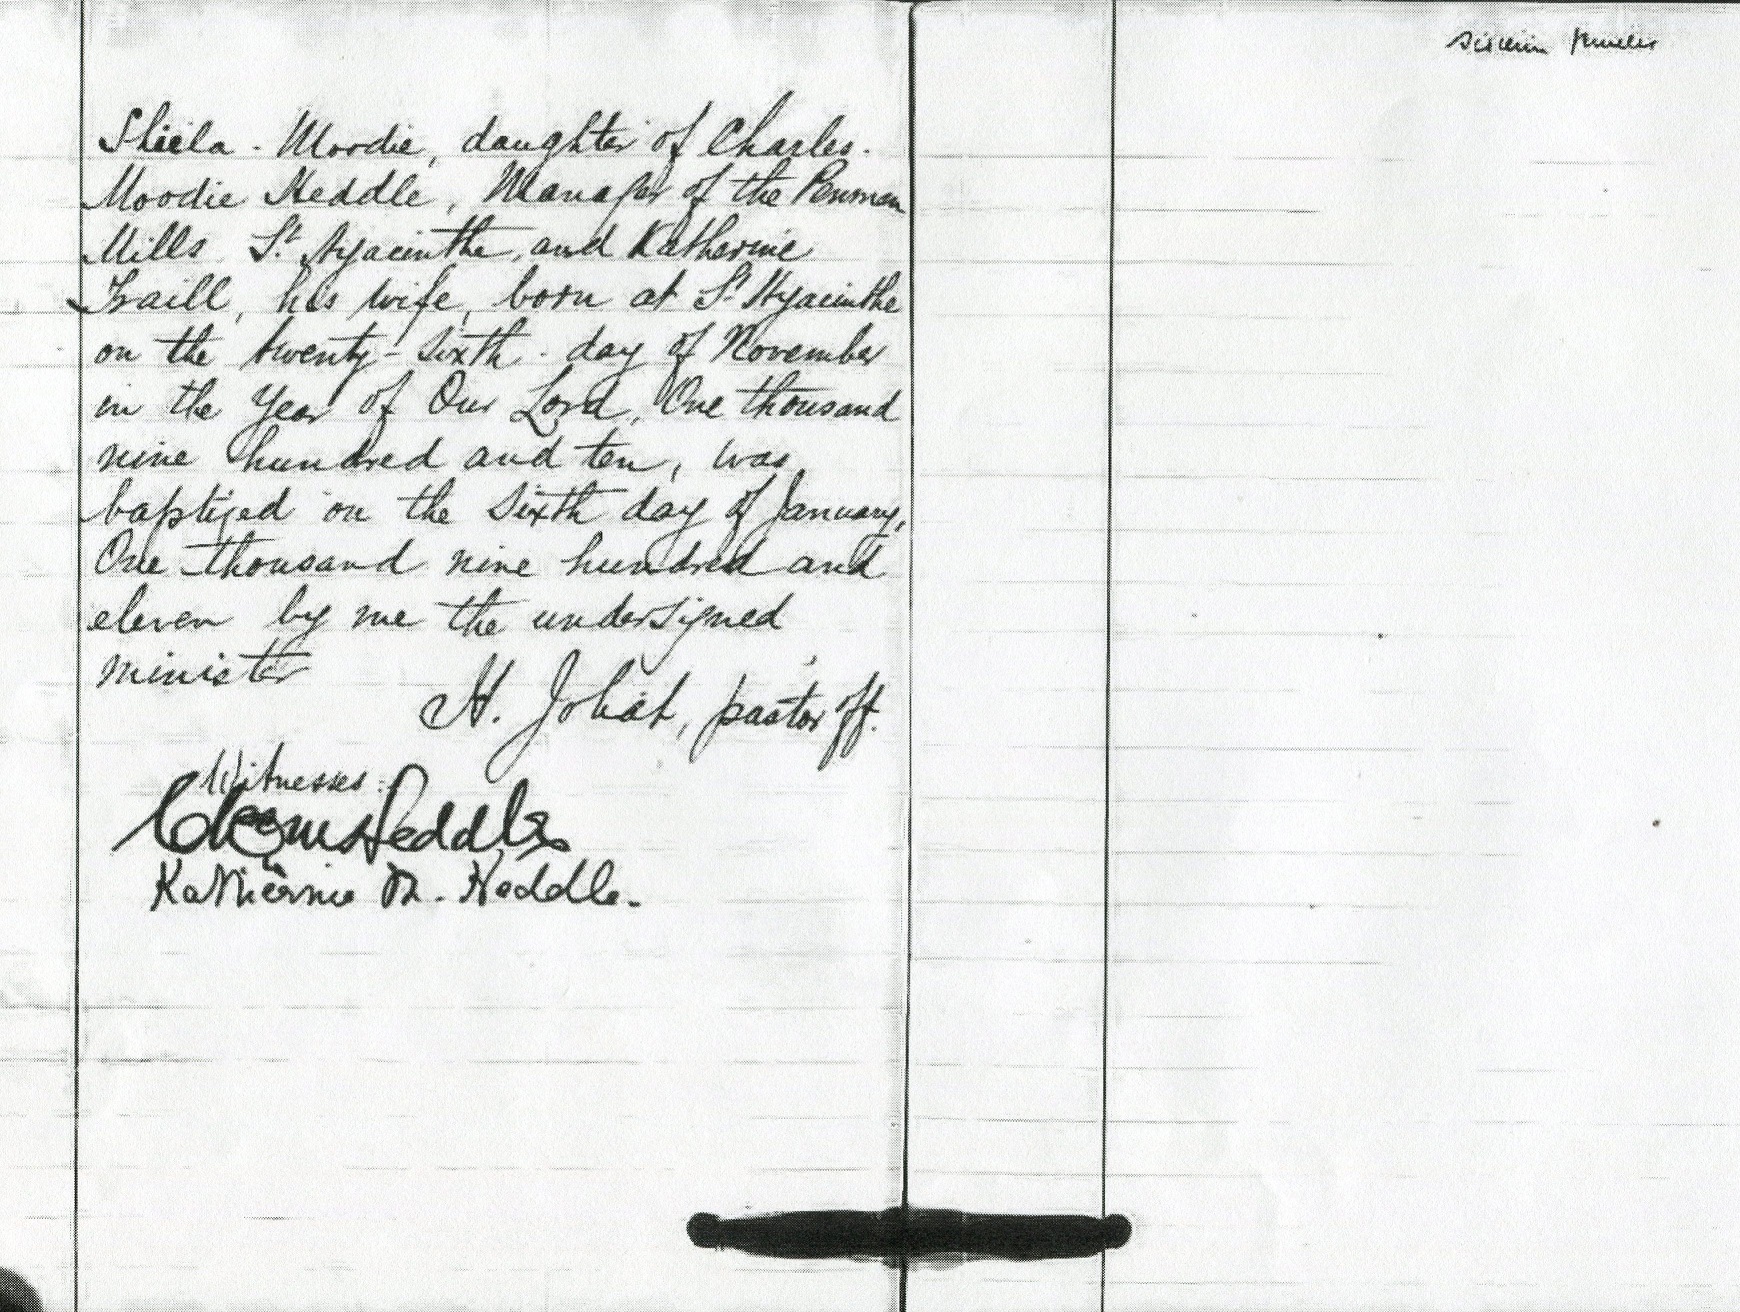 baptism record - shiela moodie heddle 1910.jpg